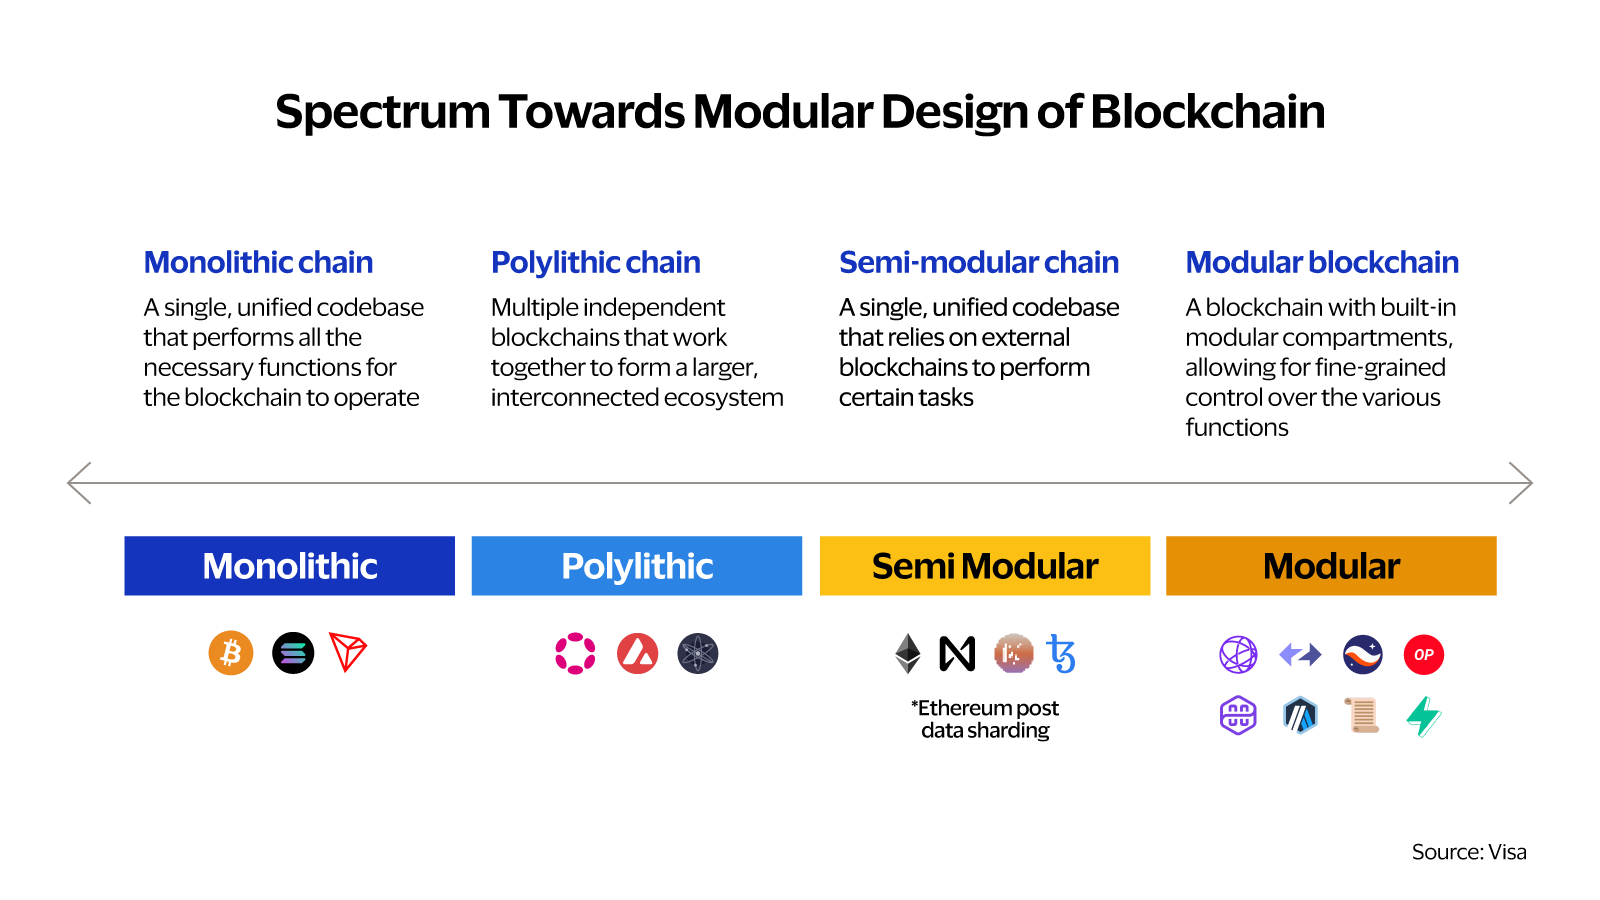 Spectrum toward blockchain modular design. See image description for details.